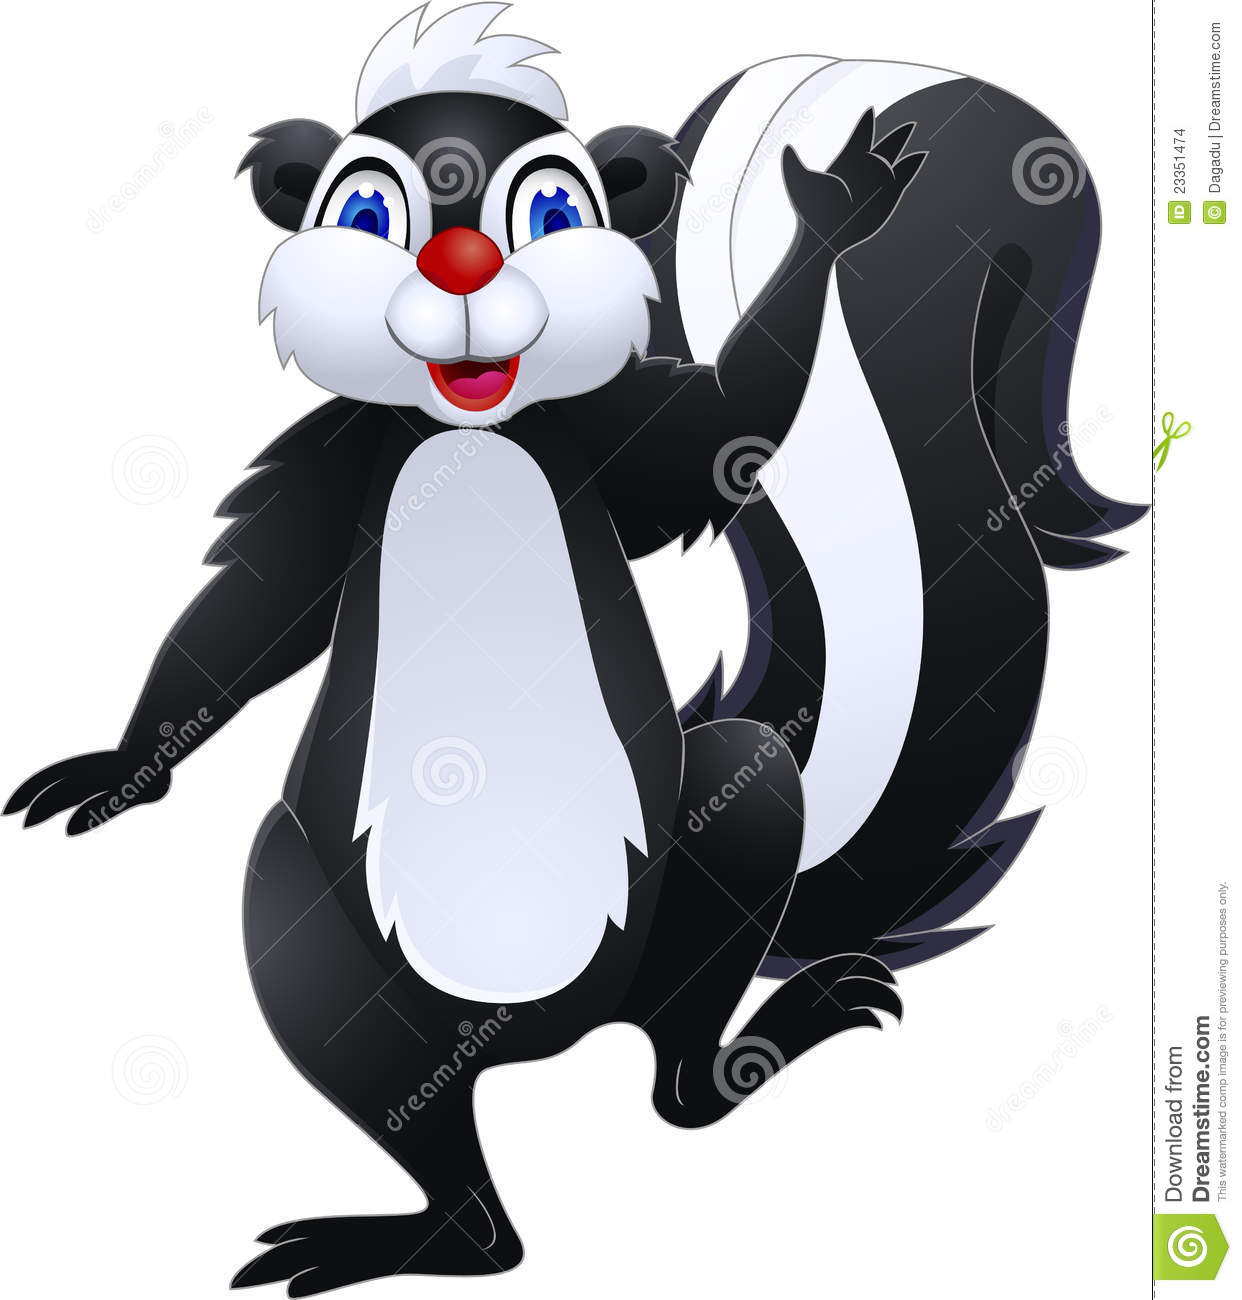 Skunk Cartoon Stock Images   Image  23351474